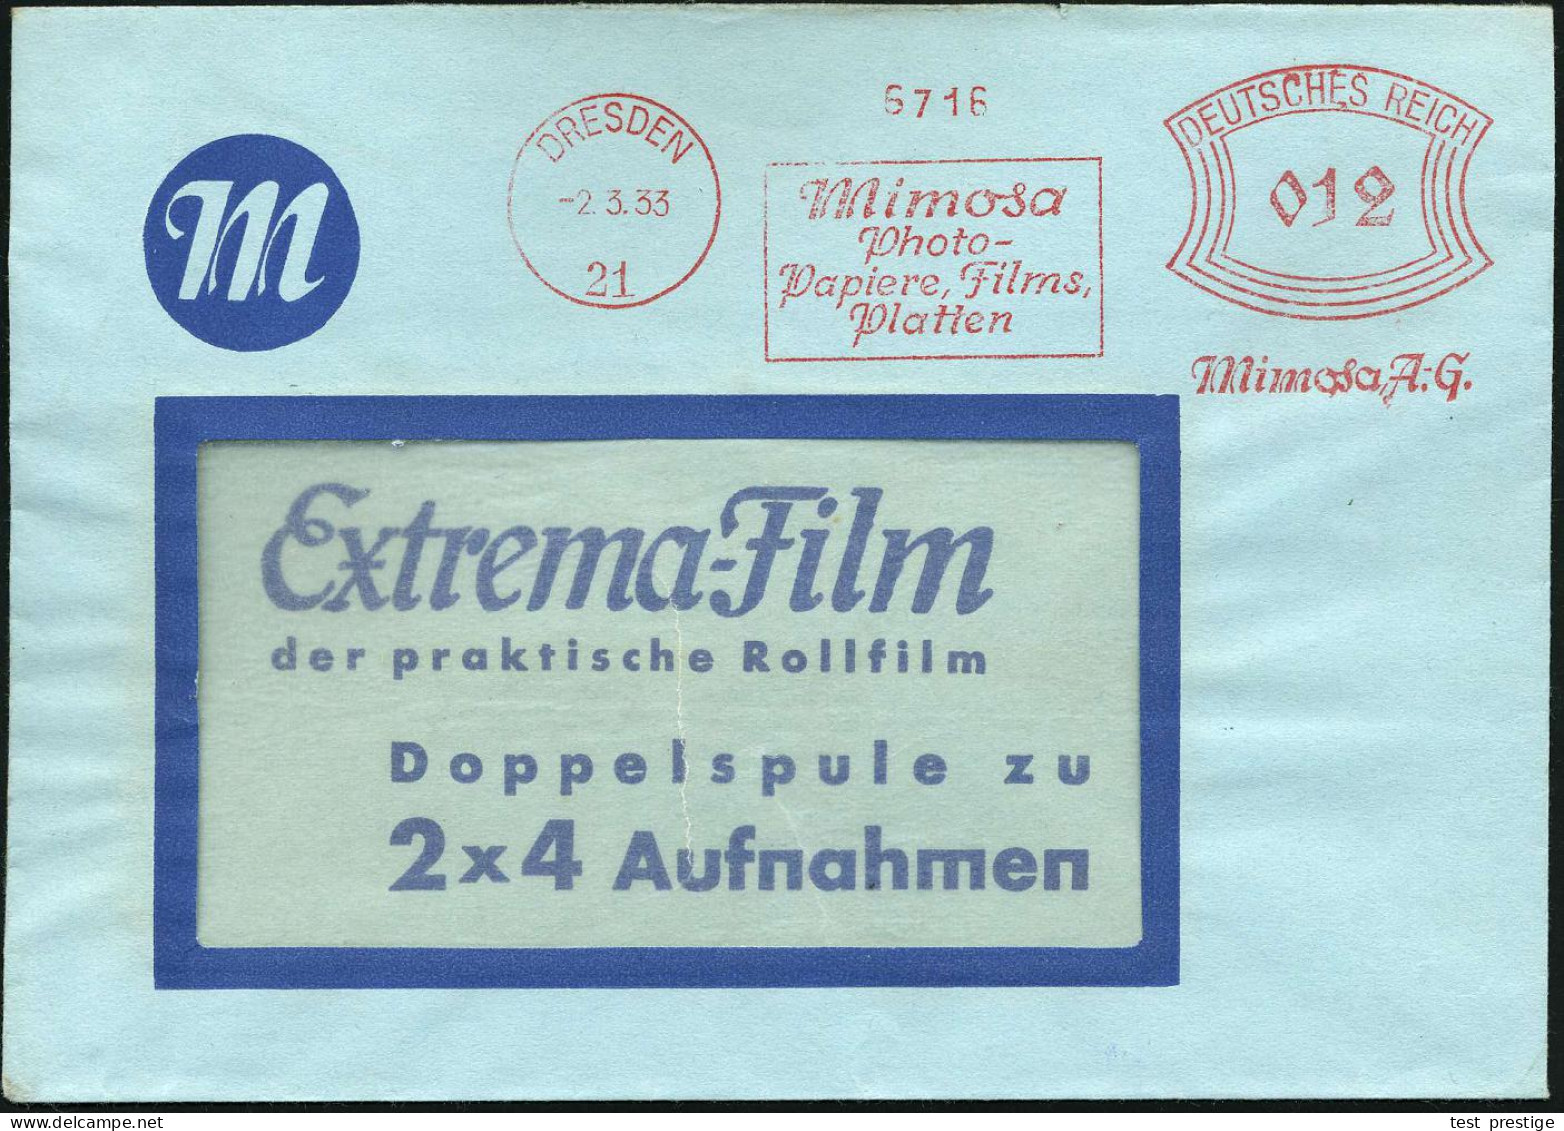 DRESDEN A21/ Mimosa/ Photo-/ Papiere,Films/ Platten.. 1933 (2.3.) AFS Francotyp Auf Dekorativem Reklame-Bf: Extrema-Film - Photographie